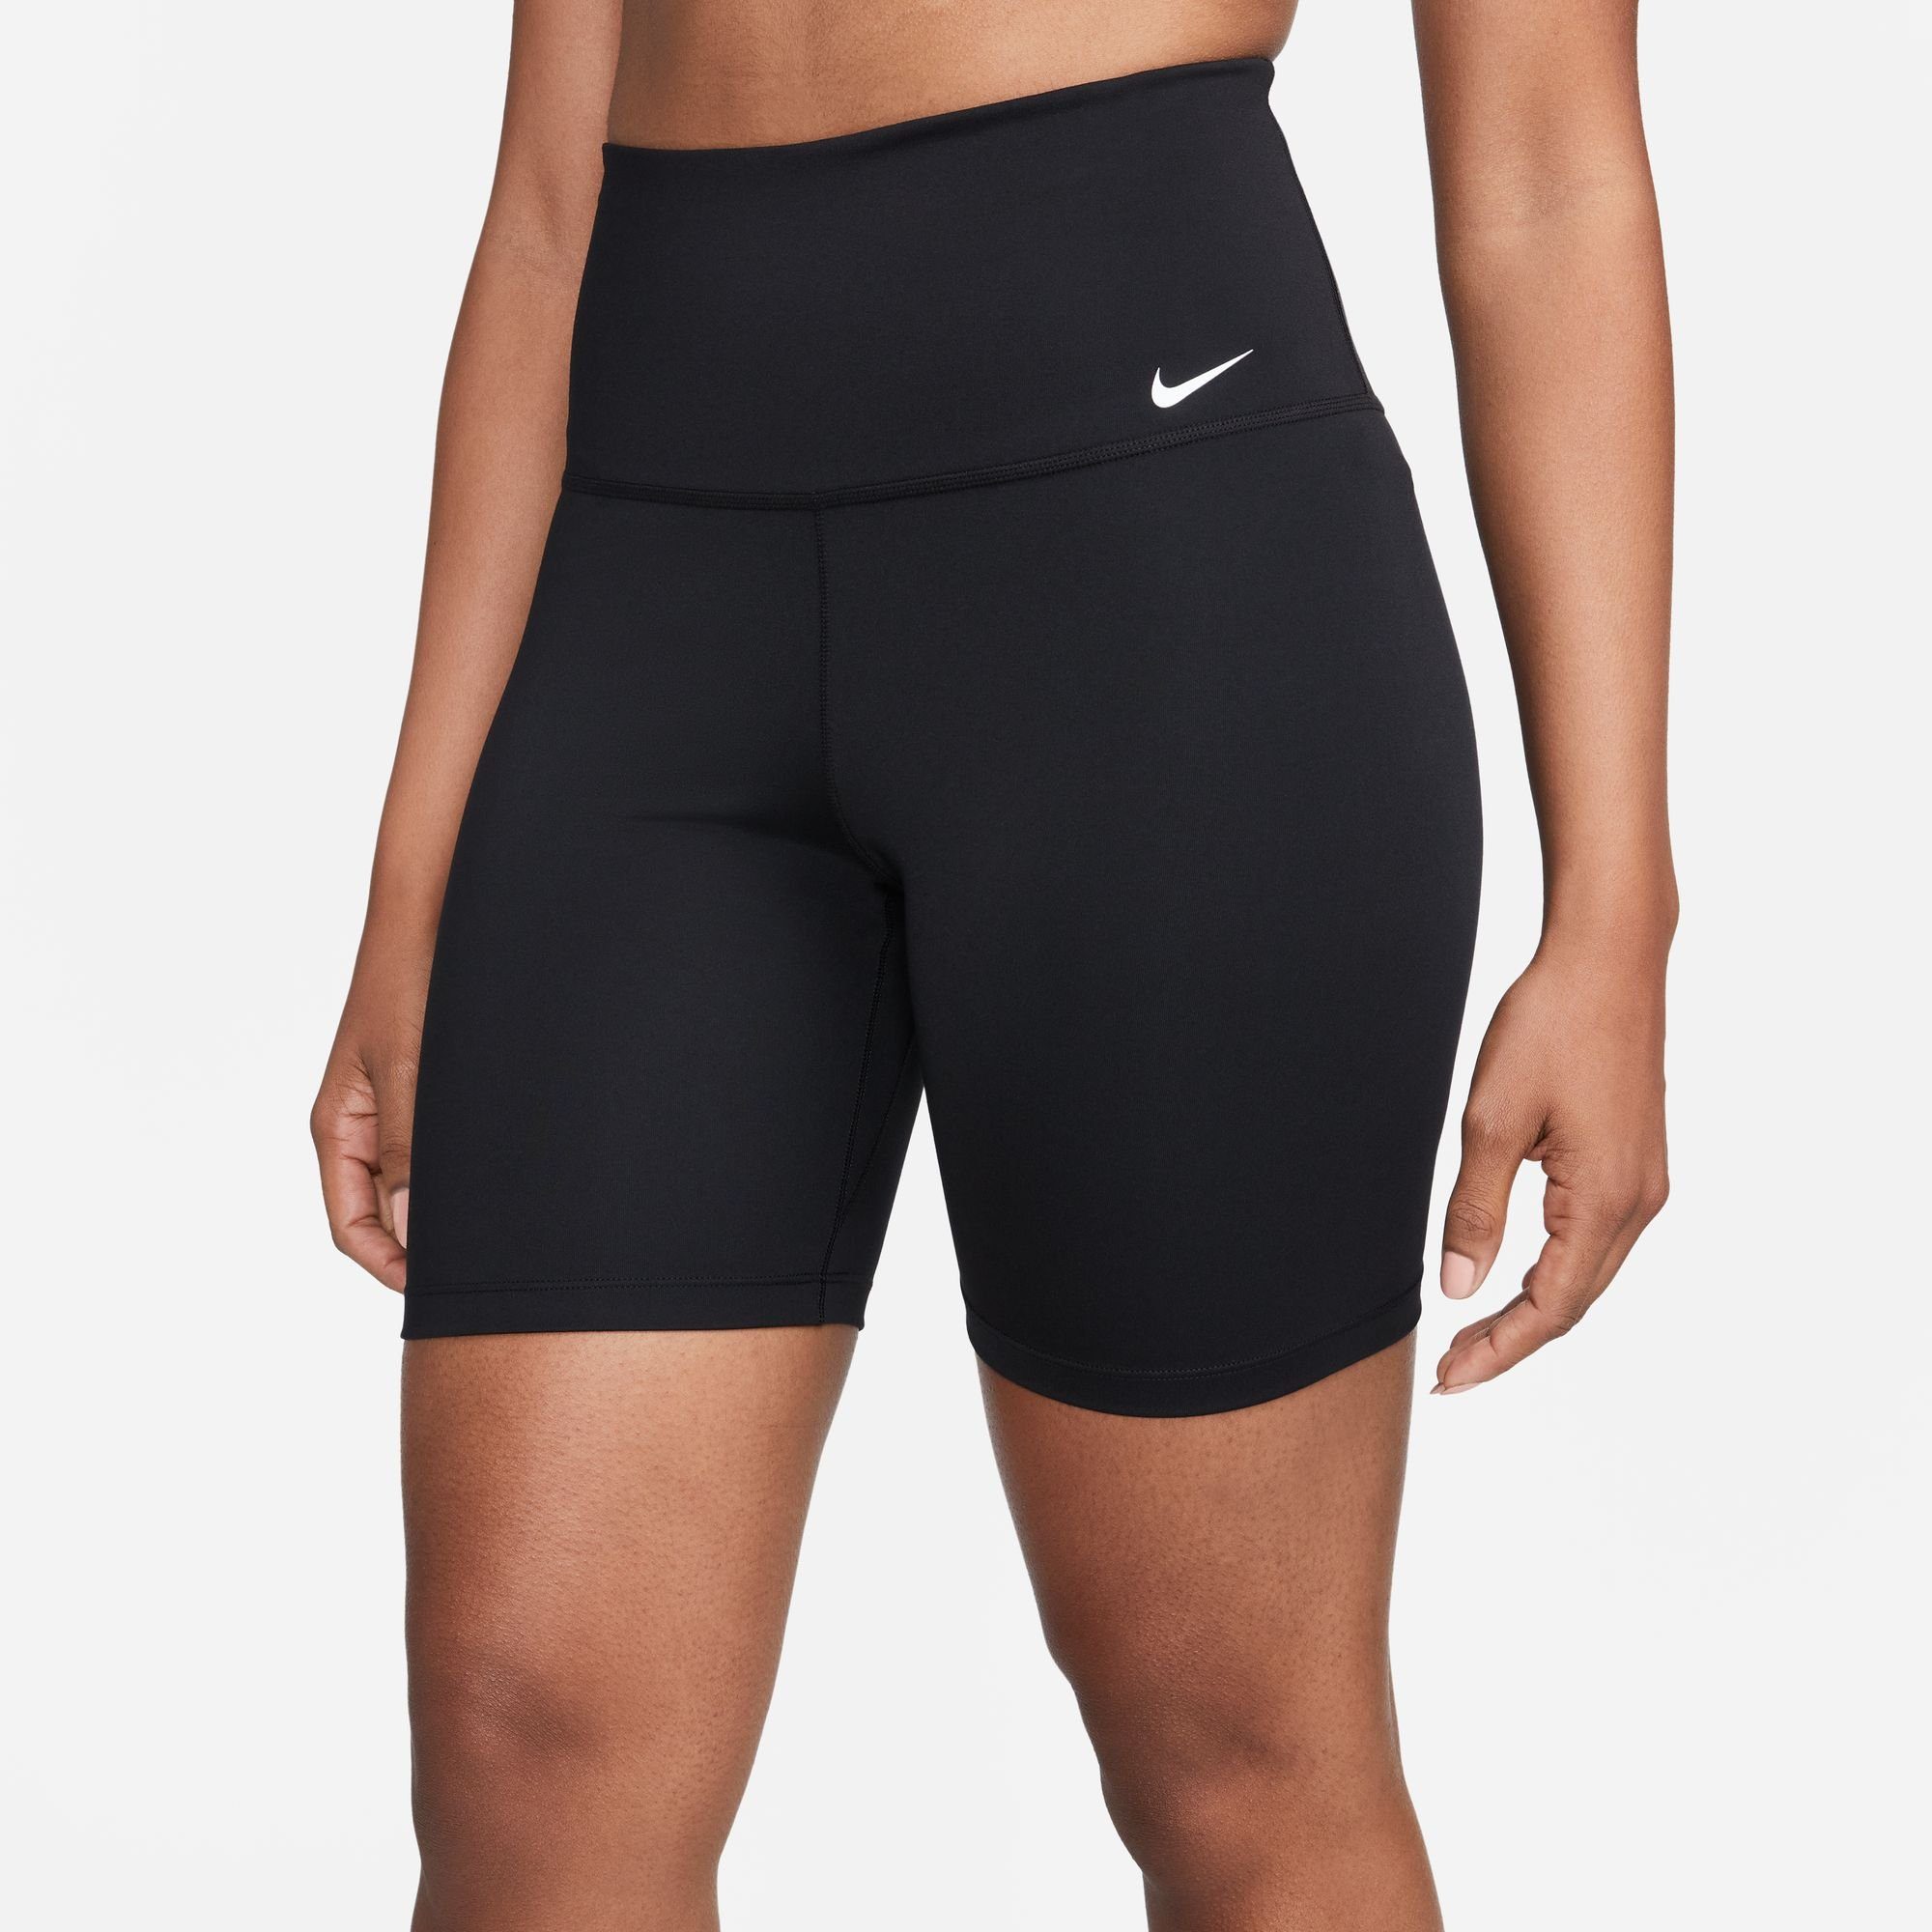 Nike HIGH-WAISTED schwarz SHORTS Trainingstights DRI-FIT WOMEN'S ONE BIKER